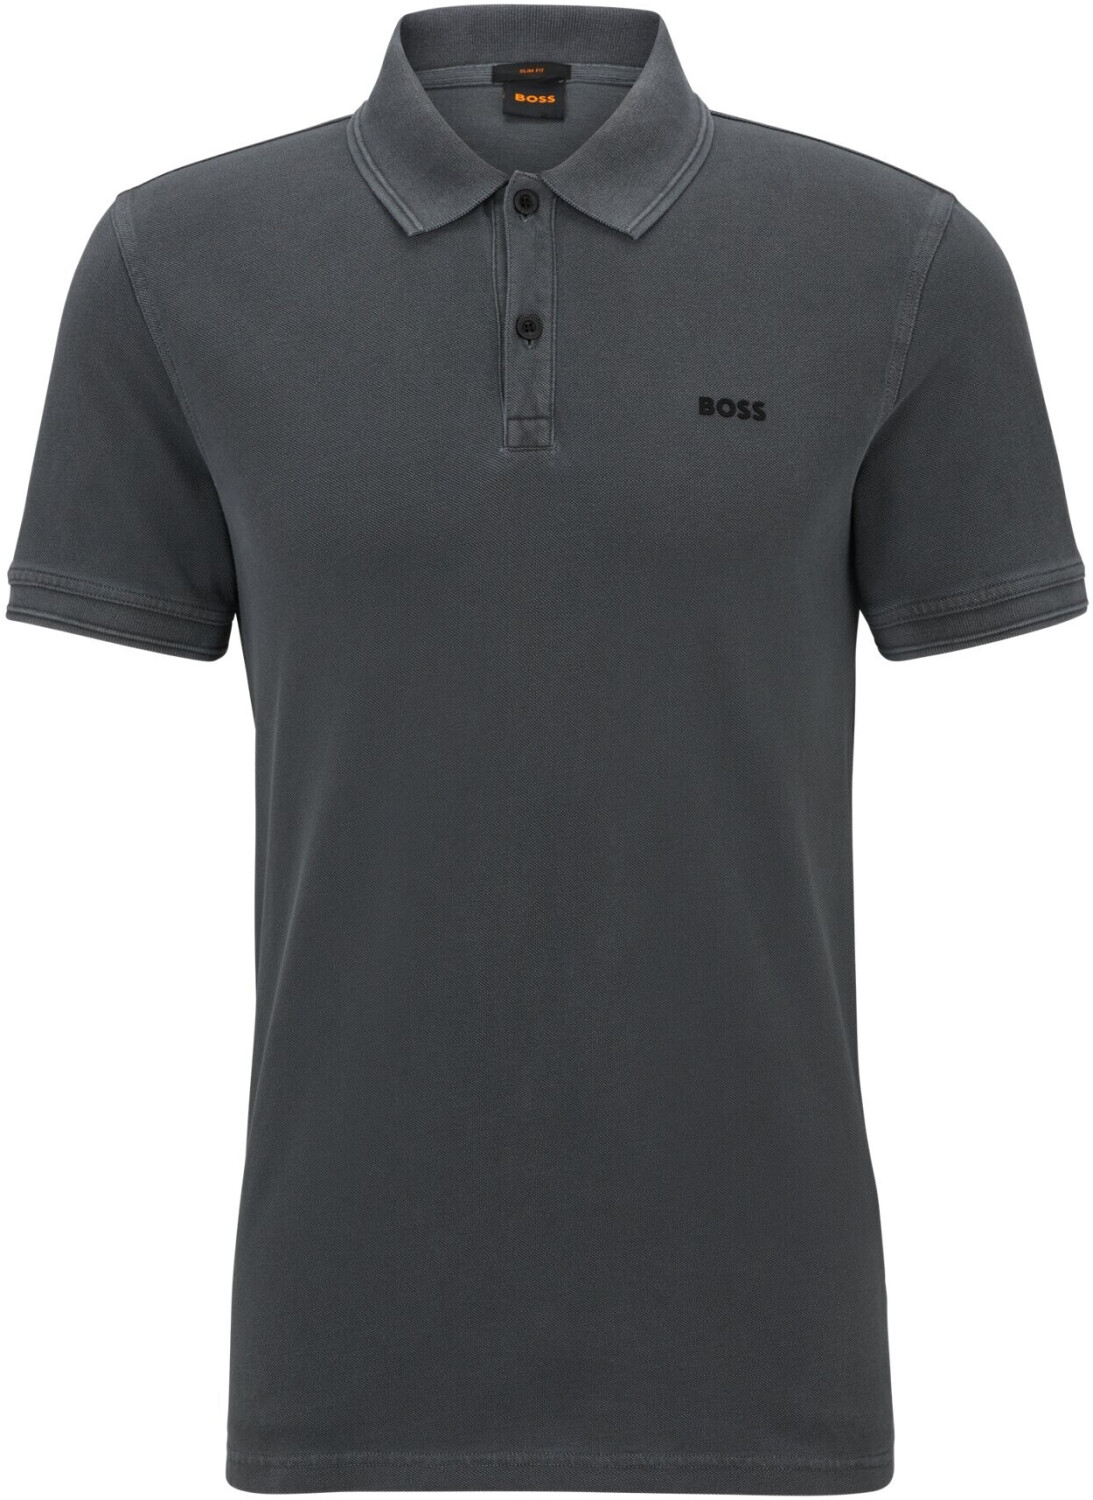 Hugo Boss Prime Slim-Fit Poloshirt (50468576-022) dark grey ab € 50,99 |  Preisvergleich bei